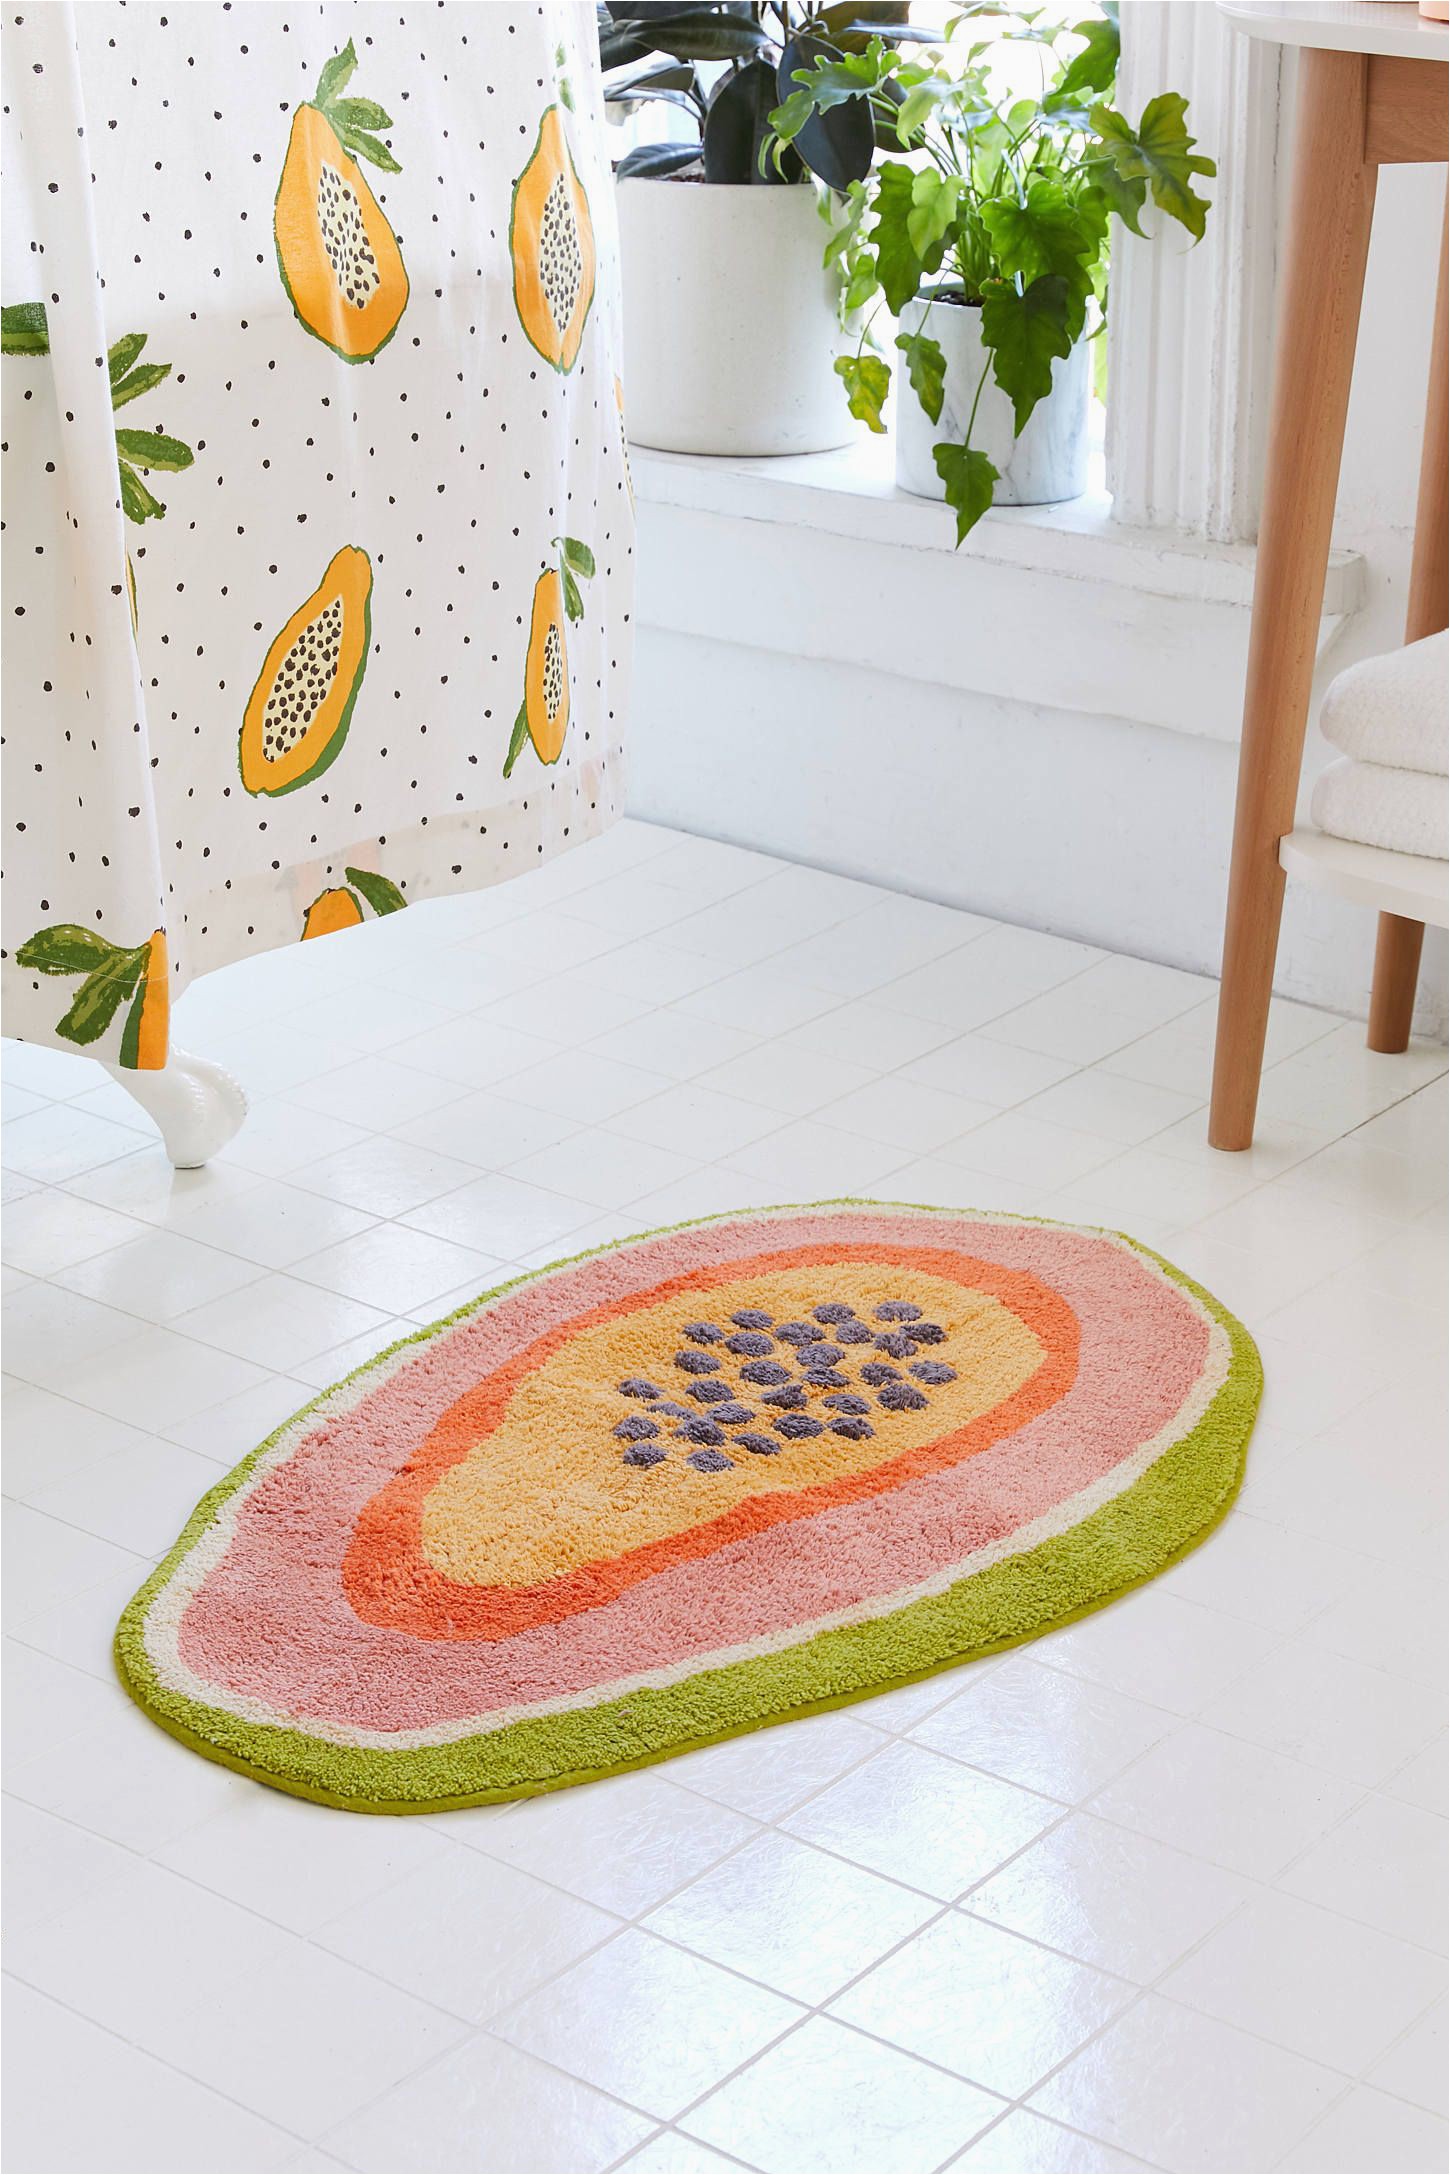 Peach Color Bathroom Rugs Papaya Bath Mat